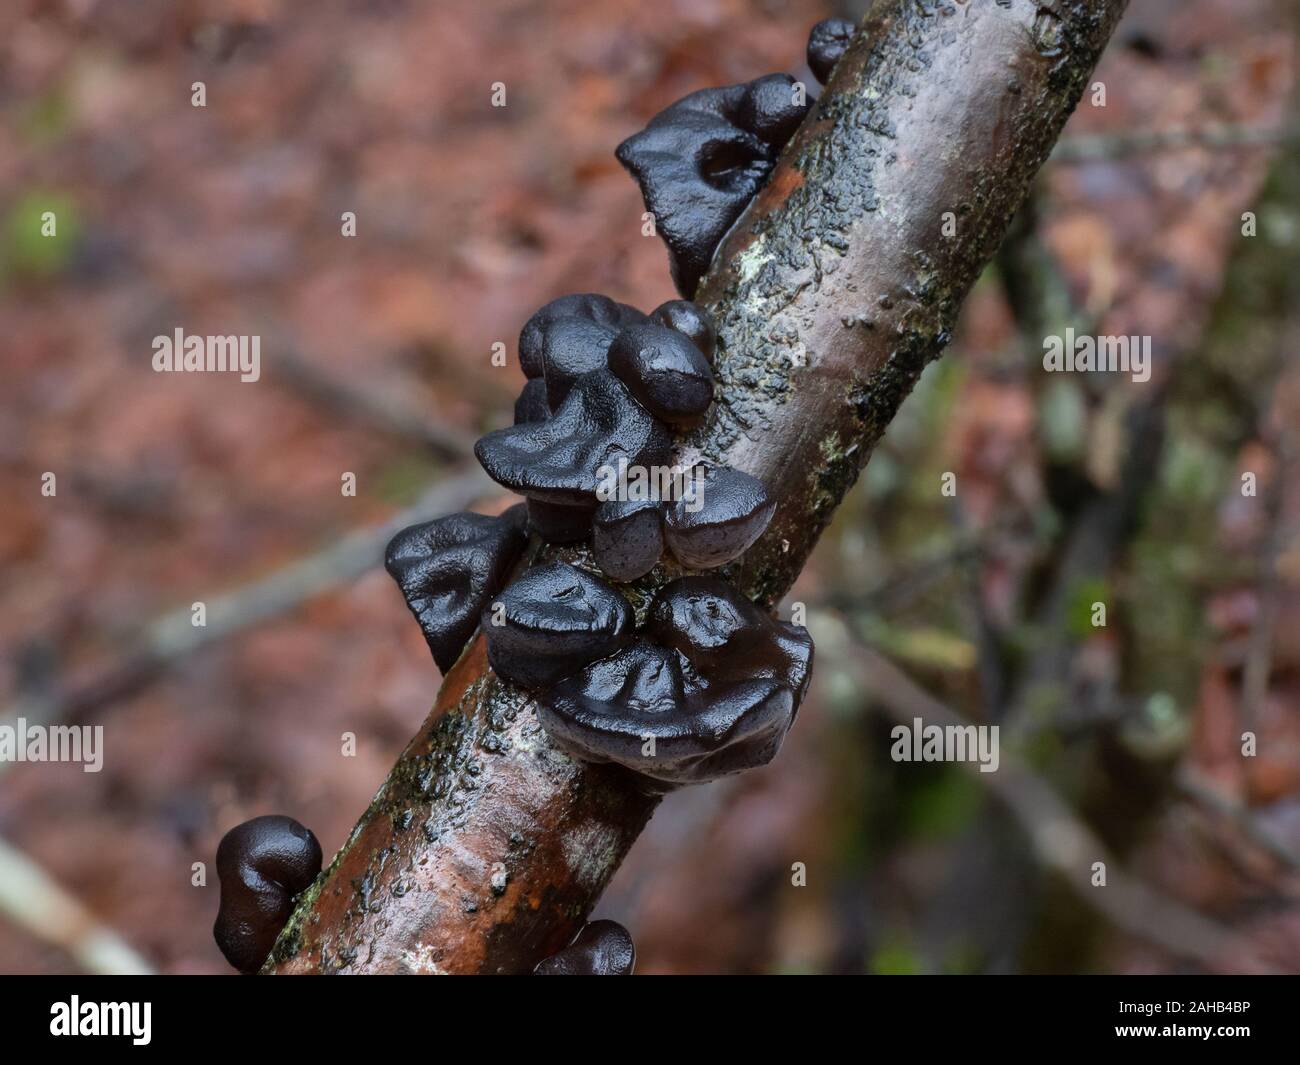 Exidia glandulosa (common names black witches' butter, black jelly roll, or warty jelly fungus) growing in Görvälns naturreservat, Järfälla, Sweden Stock Photo